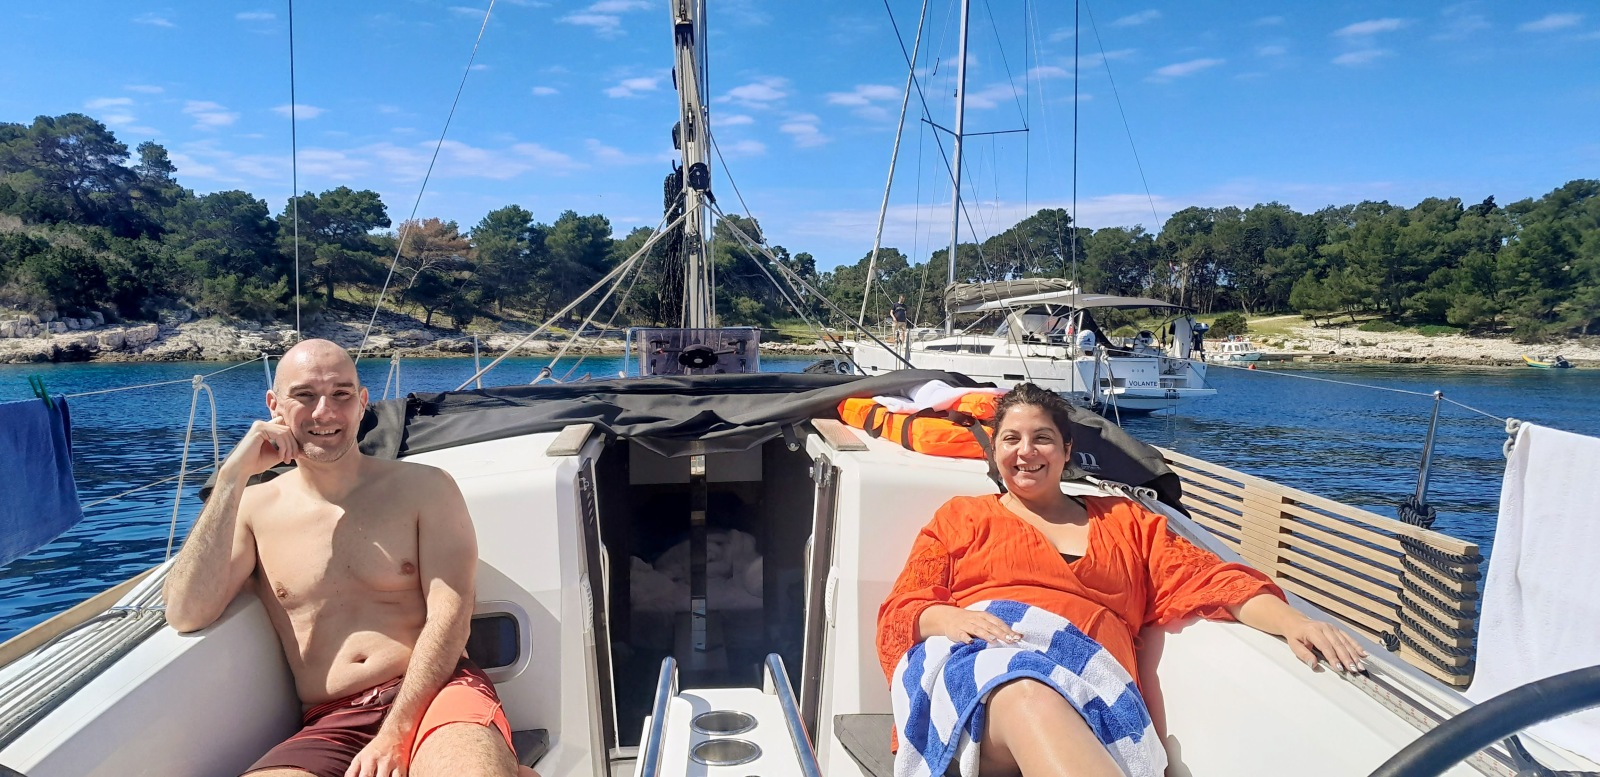 Eduard and Paula on yacht Manilo at Klava, Pakleni Islands in Croatia